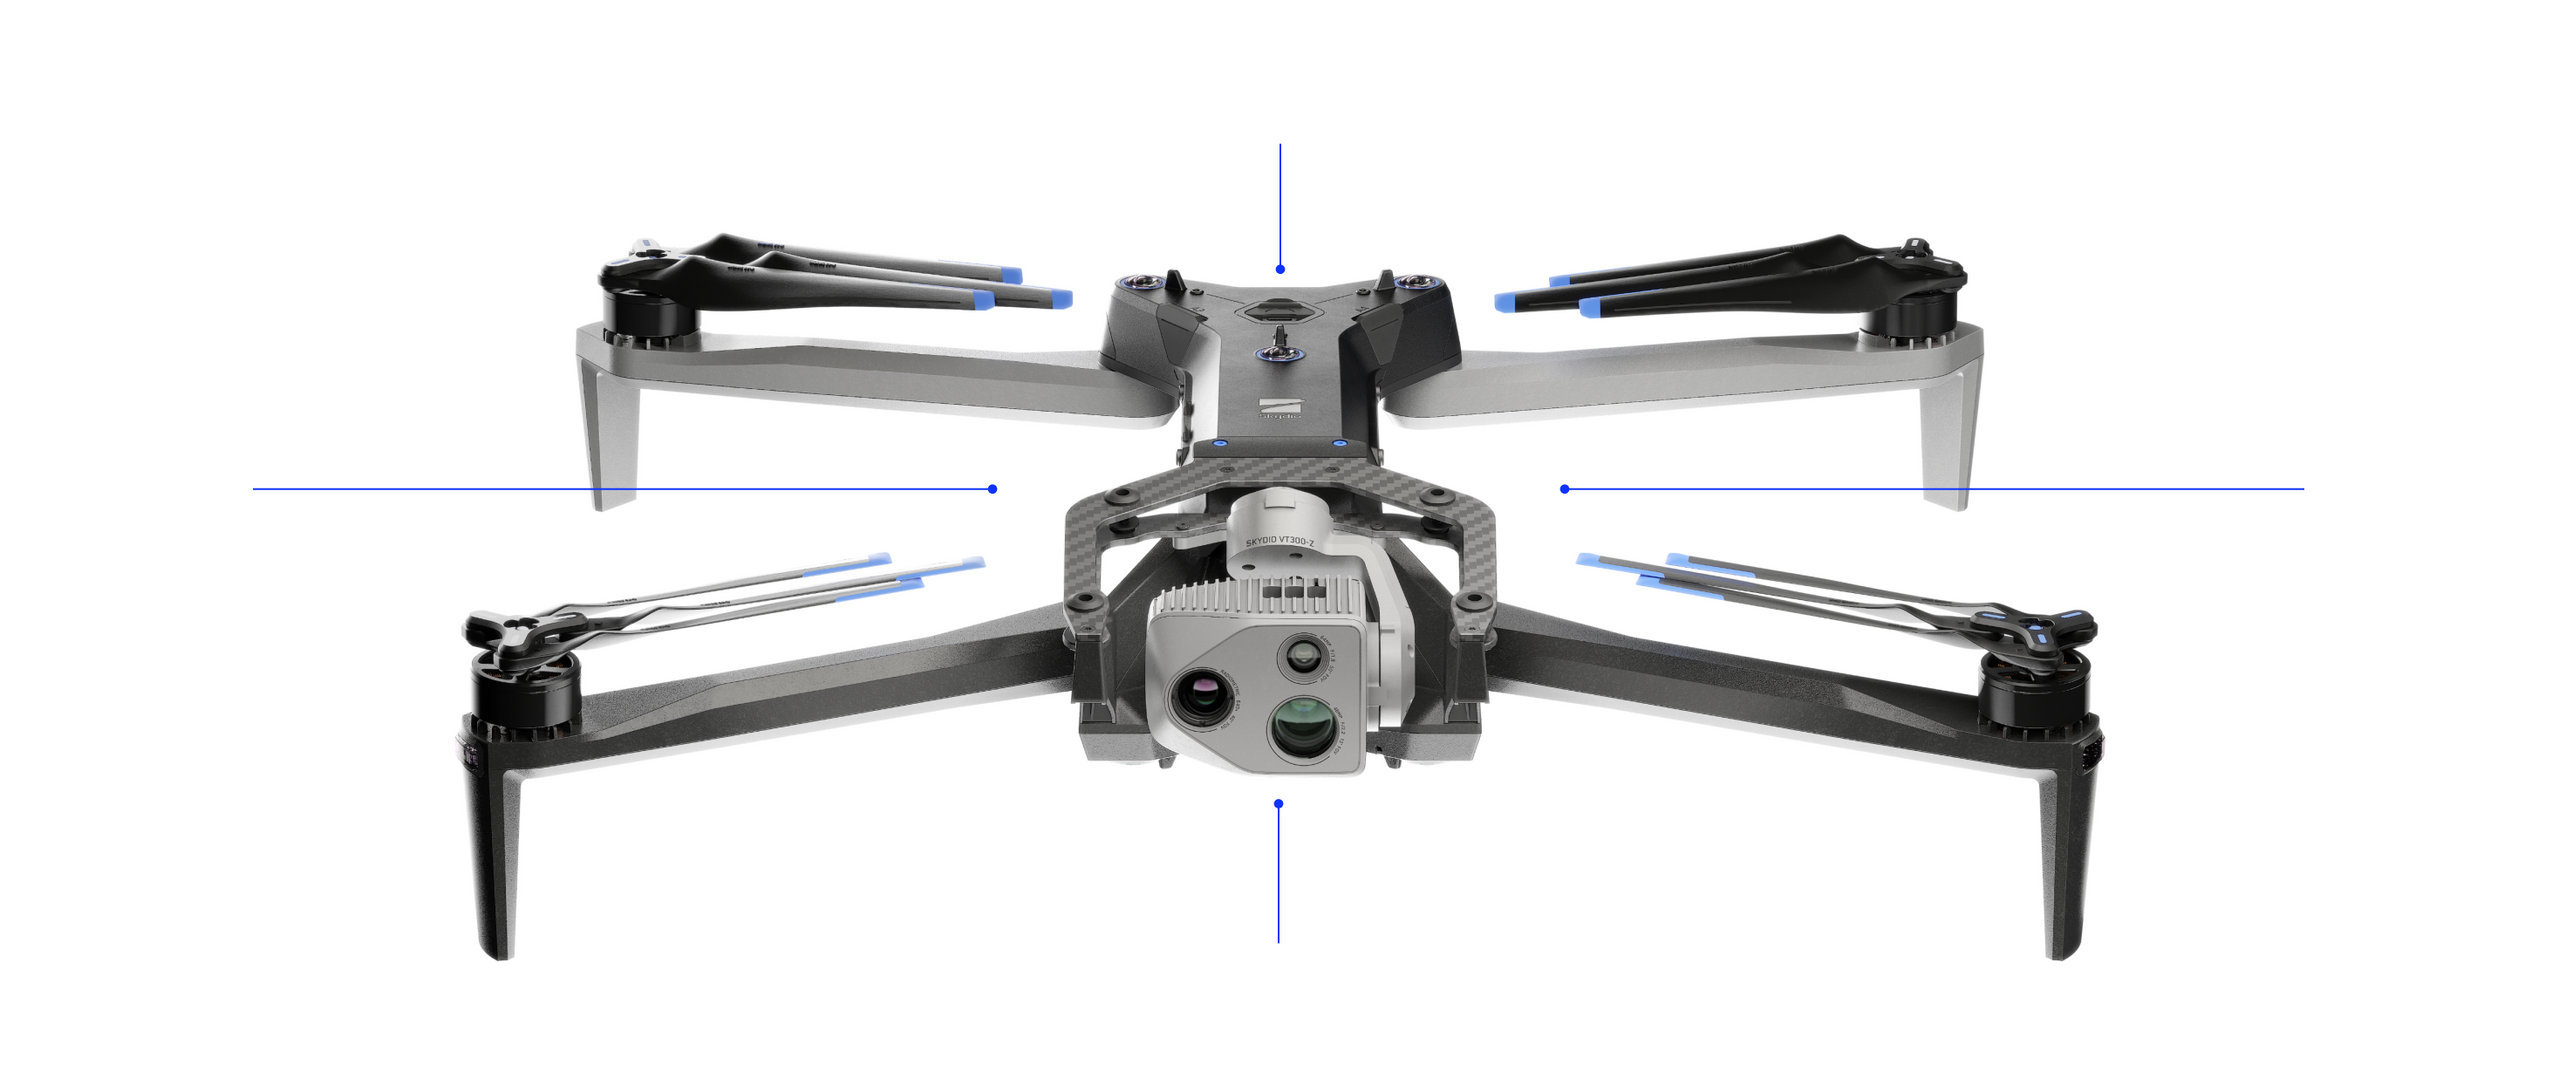 Skydio X10 Drone Starter Kit w/VT300-L, Autonomy, 3D Scan S/W,RTK